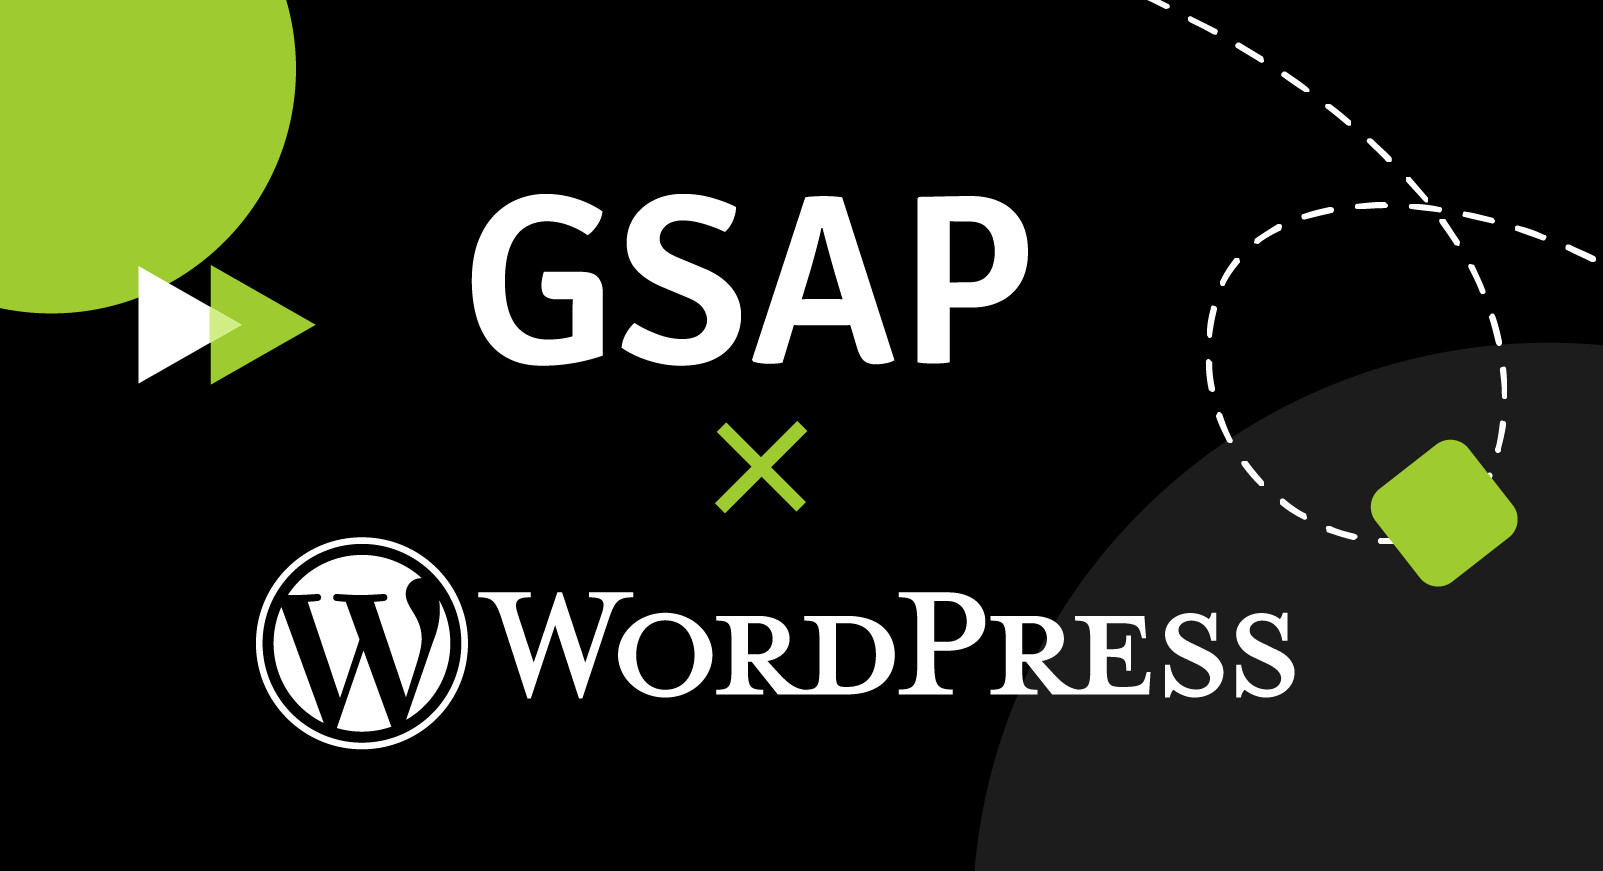 Wordpress x GSAP